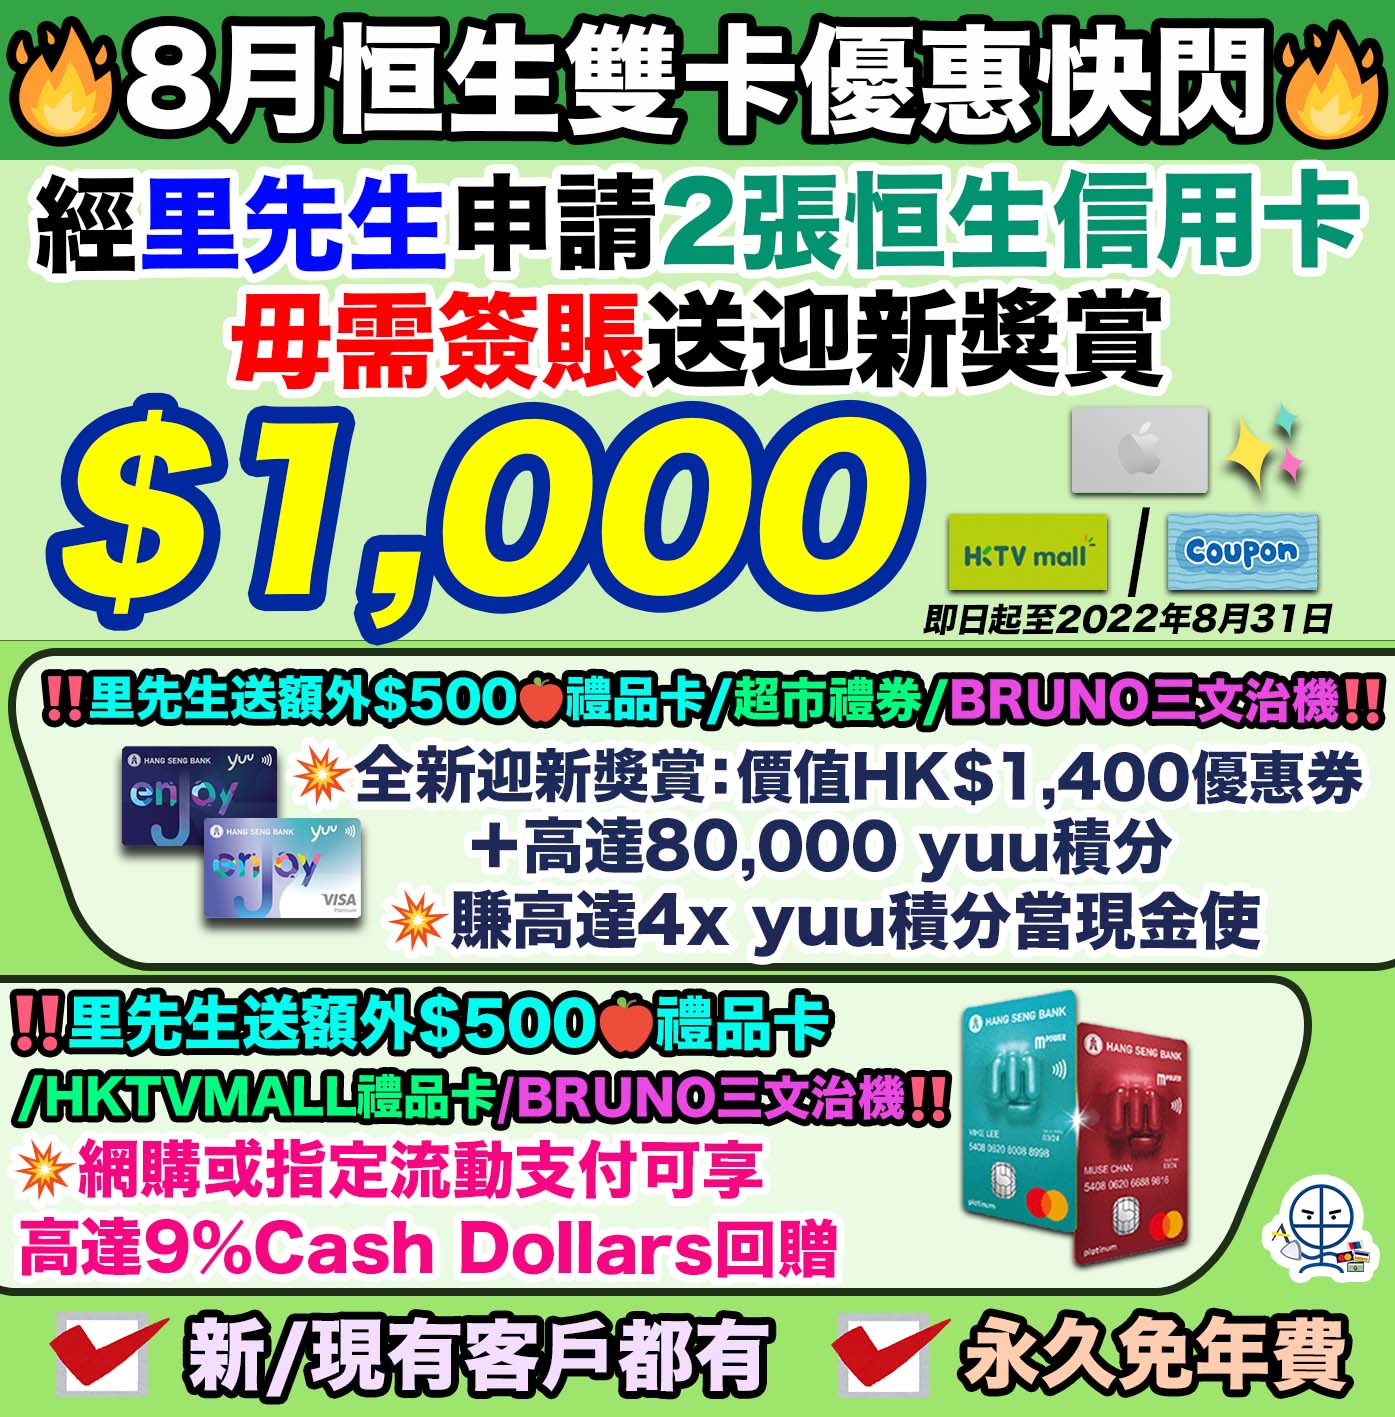 【7-Eleven 恒生信用卡優惠】憑卡於7-Eleven消費滿指定金額 即可賺高達30 Cash dollars/6,000 yuu積分！